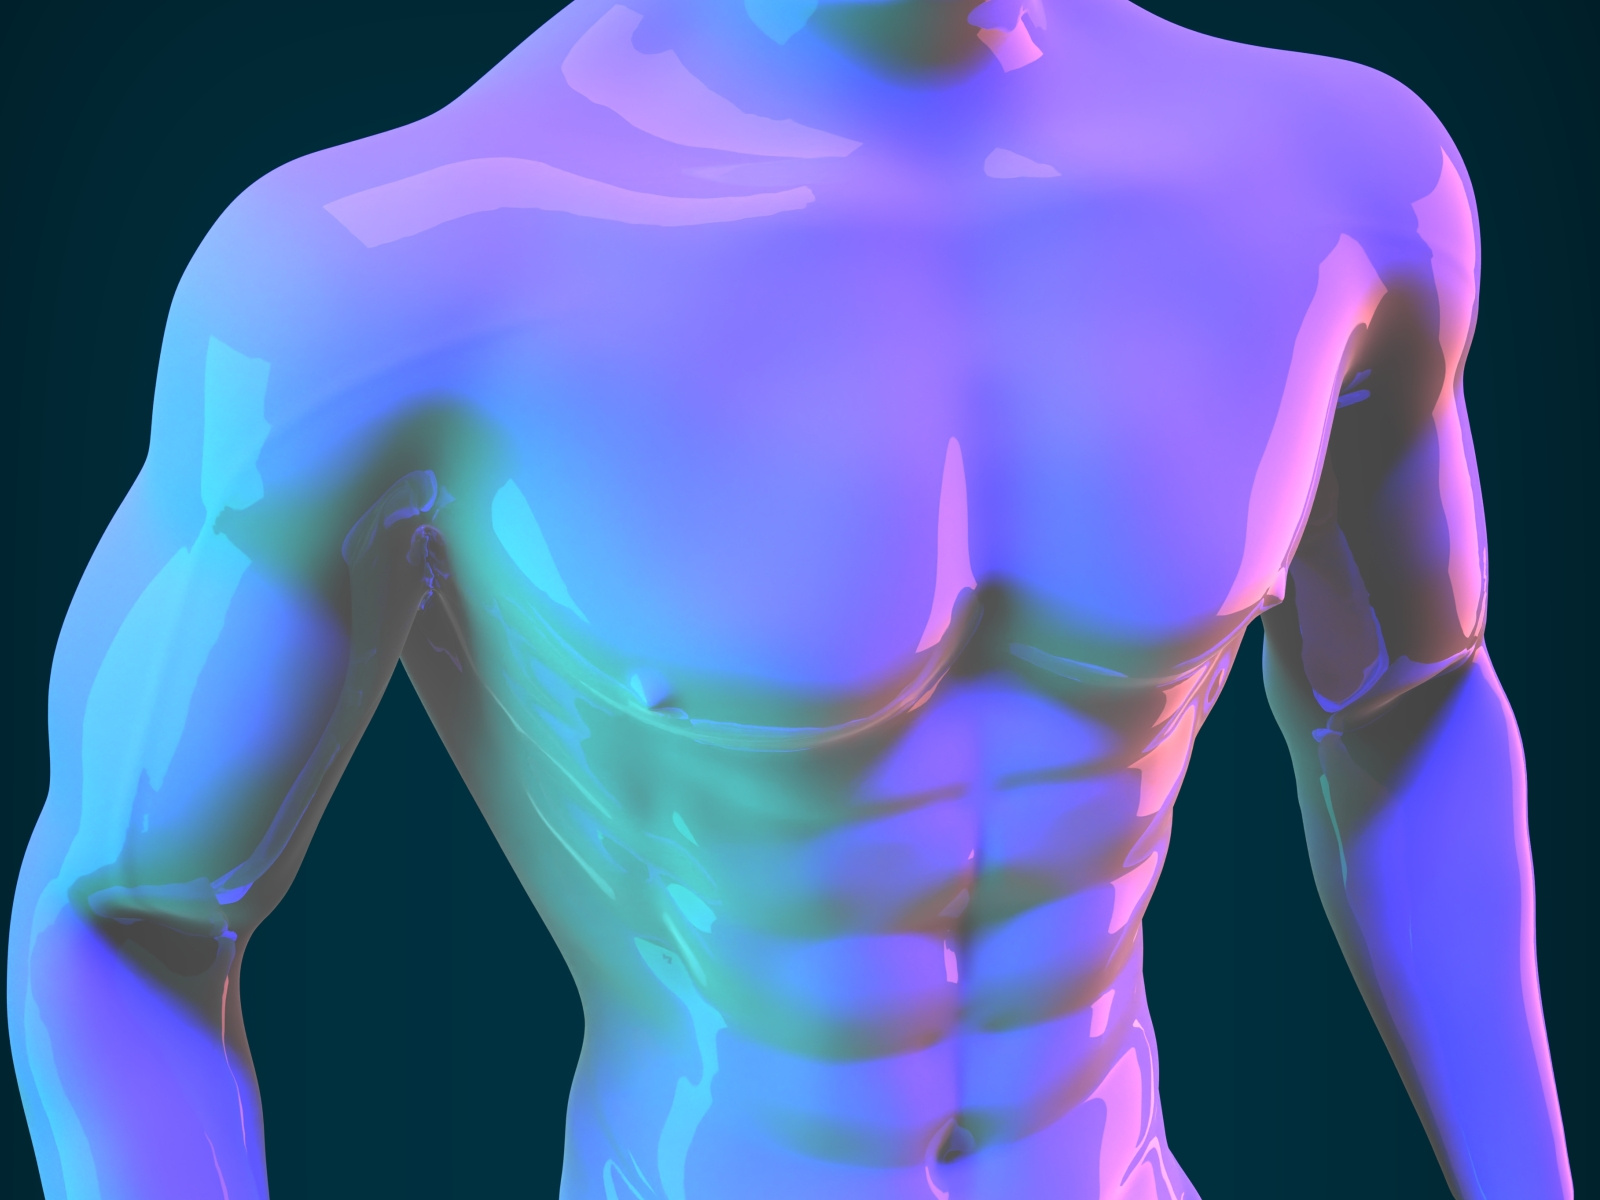 Male_Body_3D_Model by Shaimul Darick Sarker on Dribbble